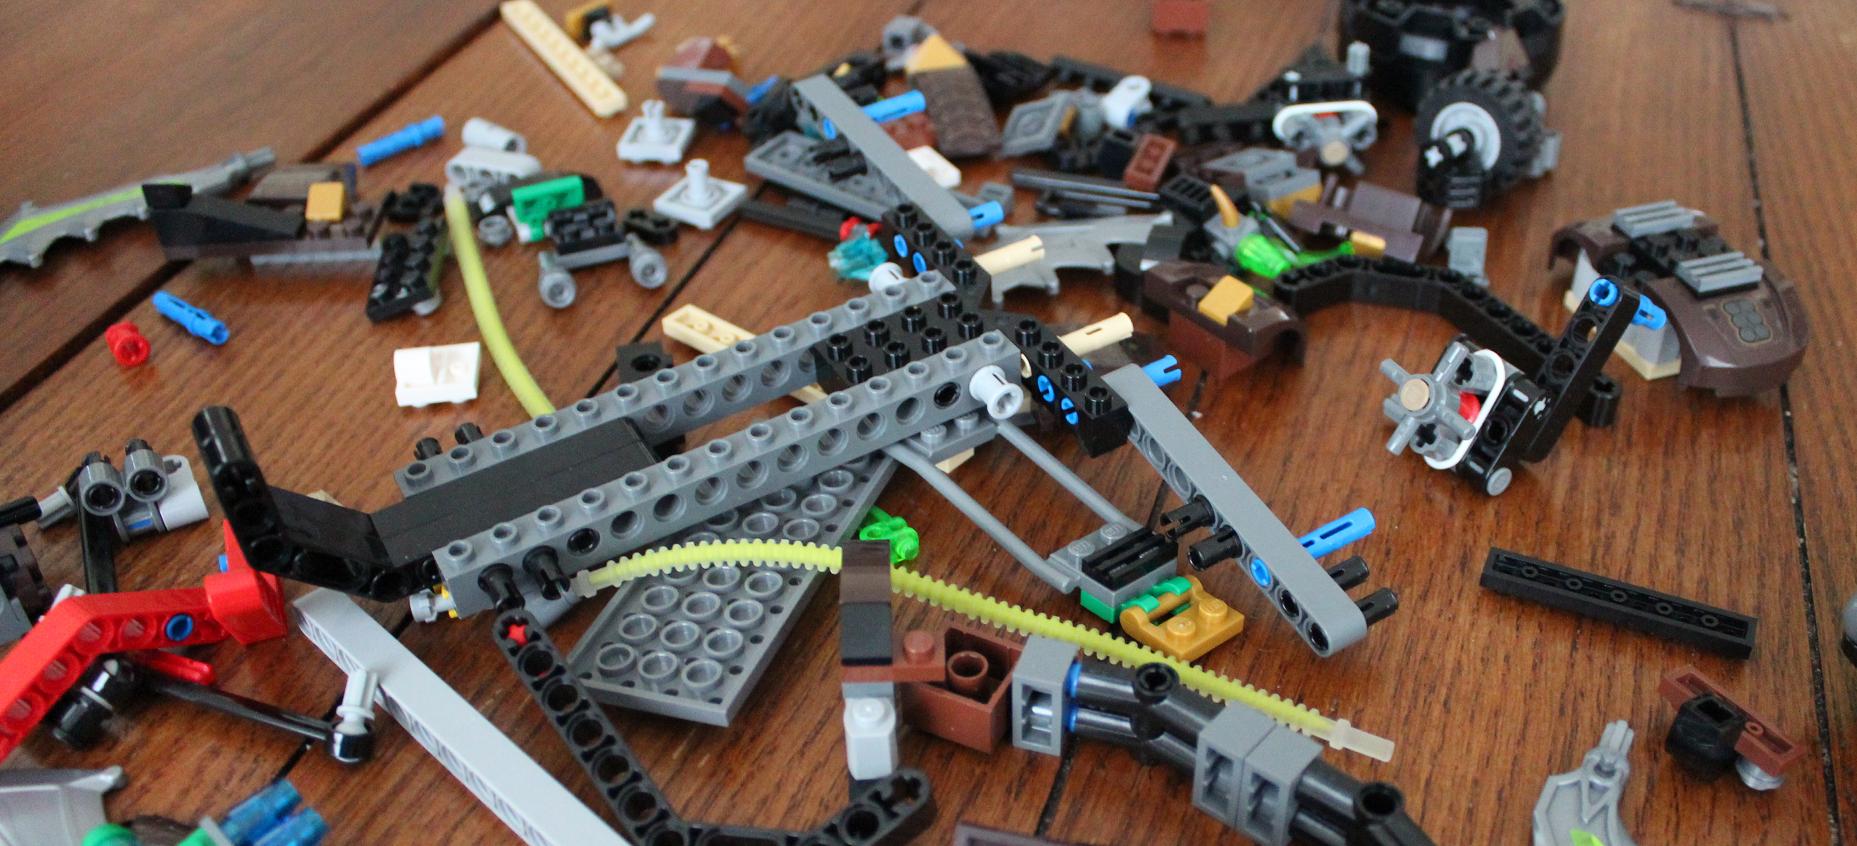 Lego chima pieces.jpg